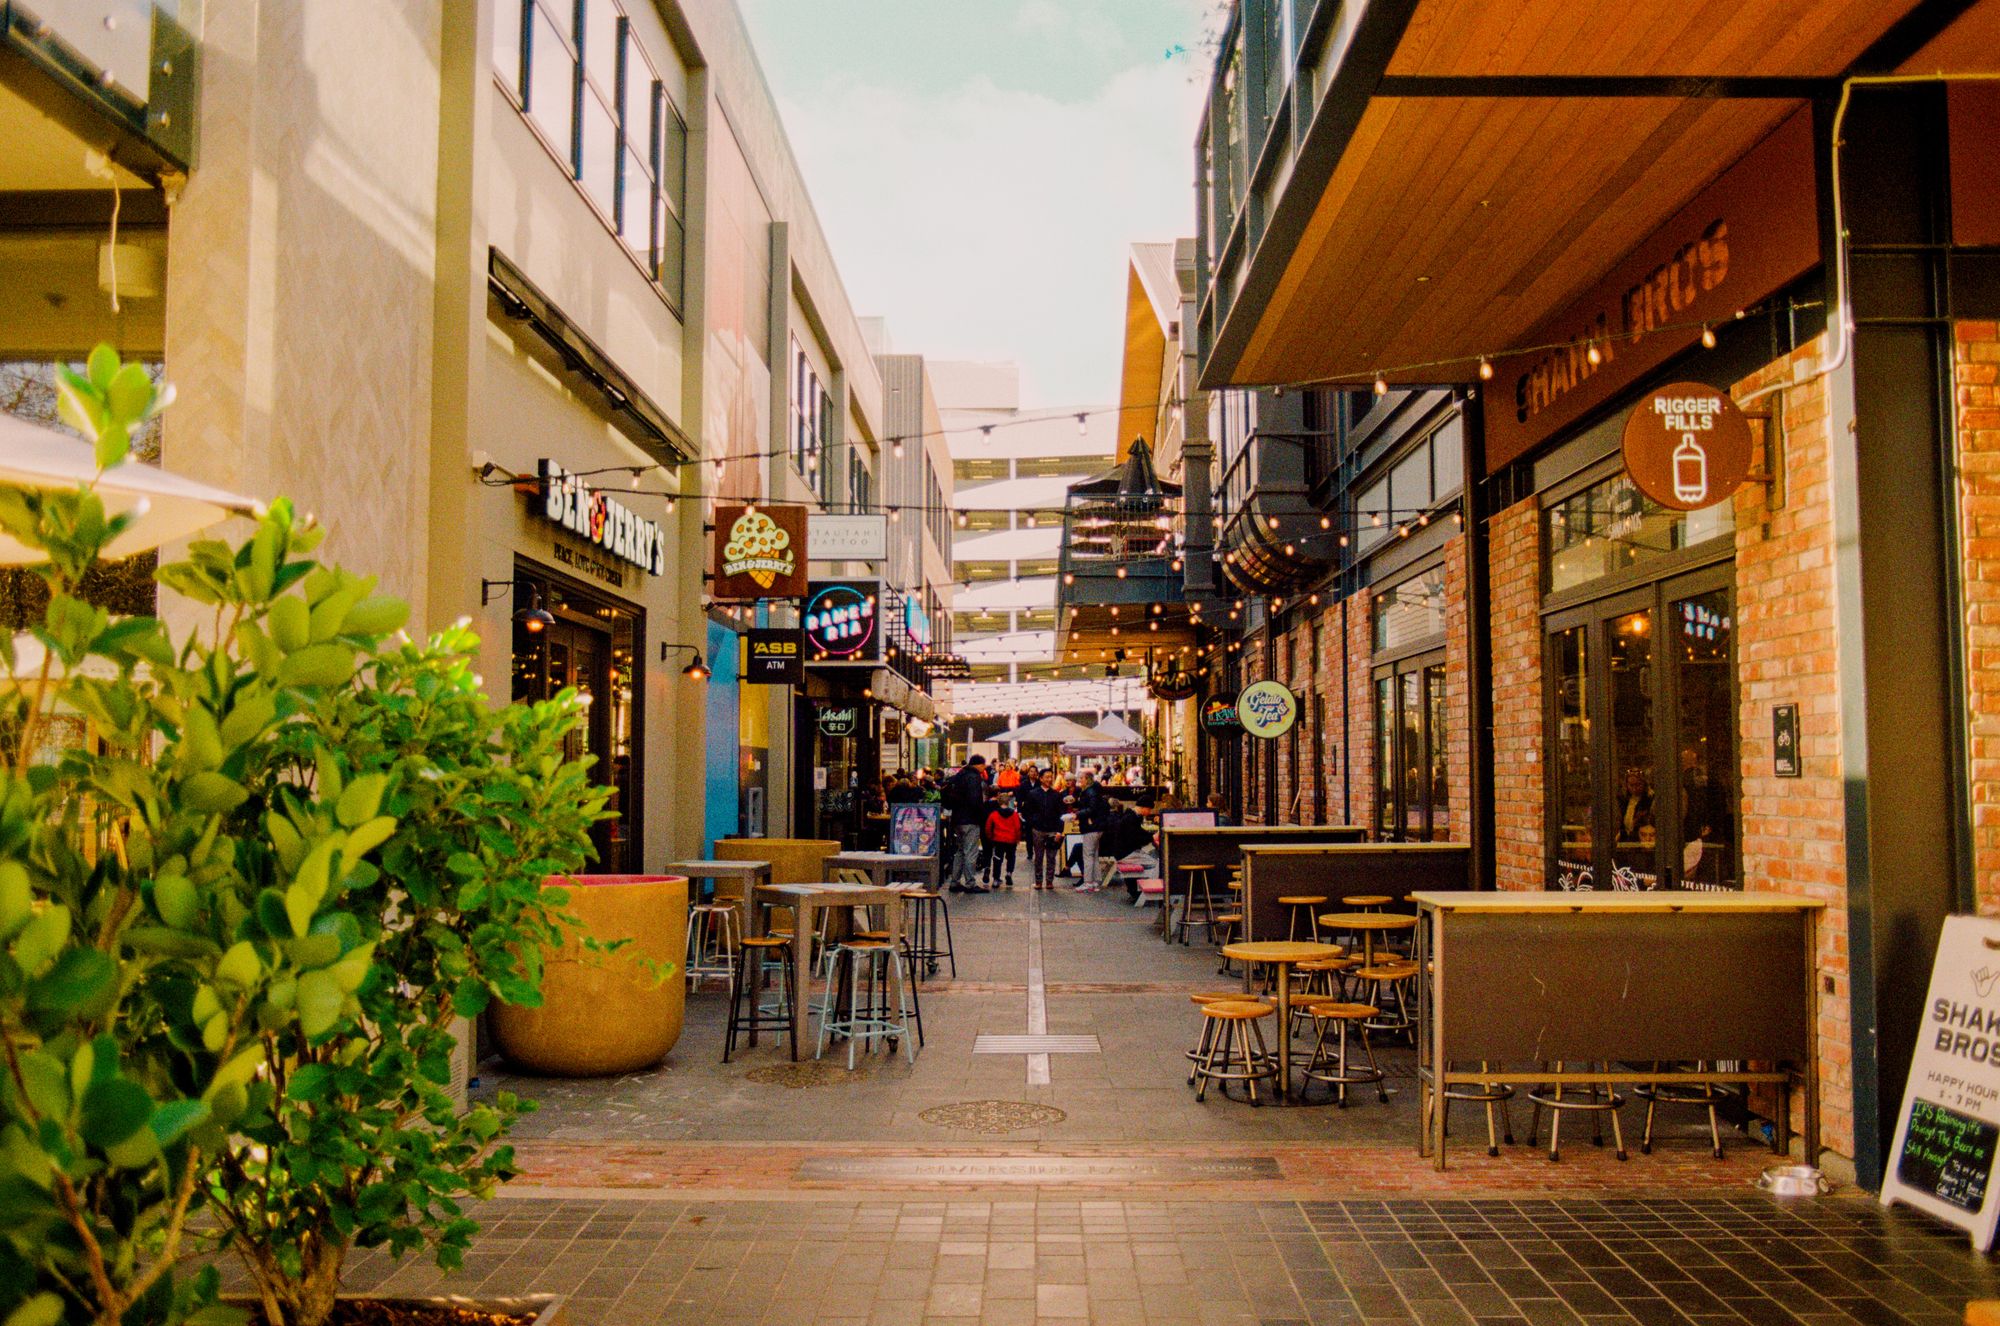 An urban market thoroughfare in New Zealand